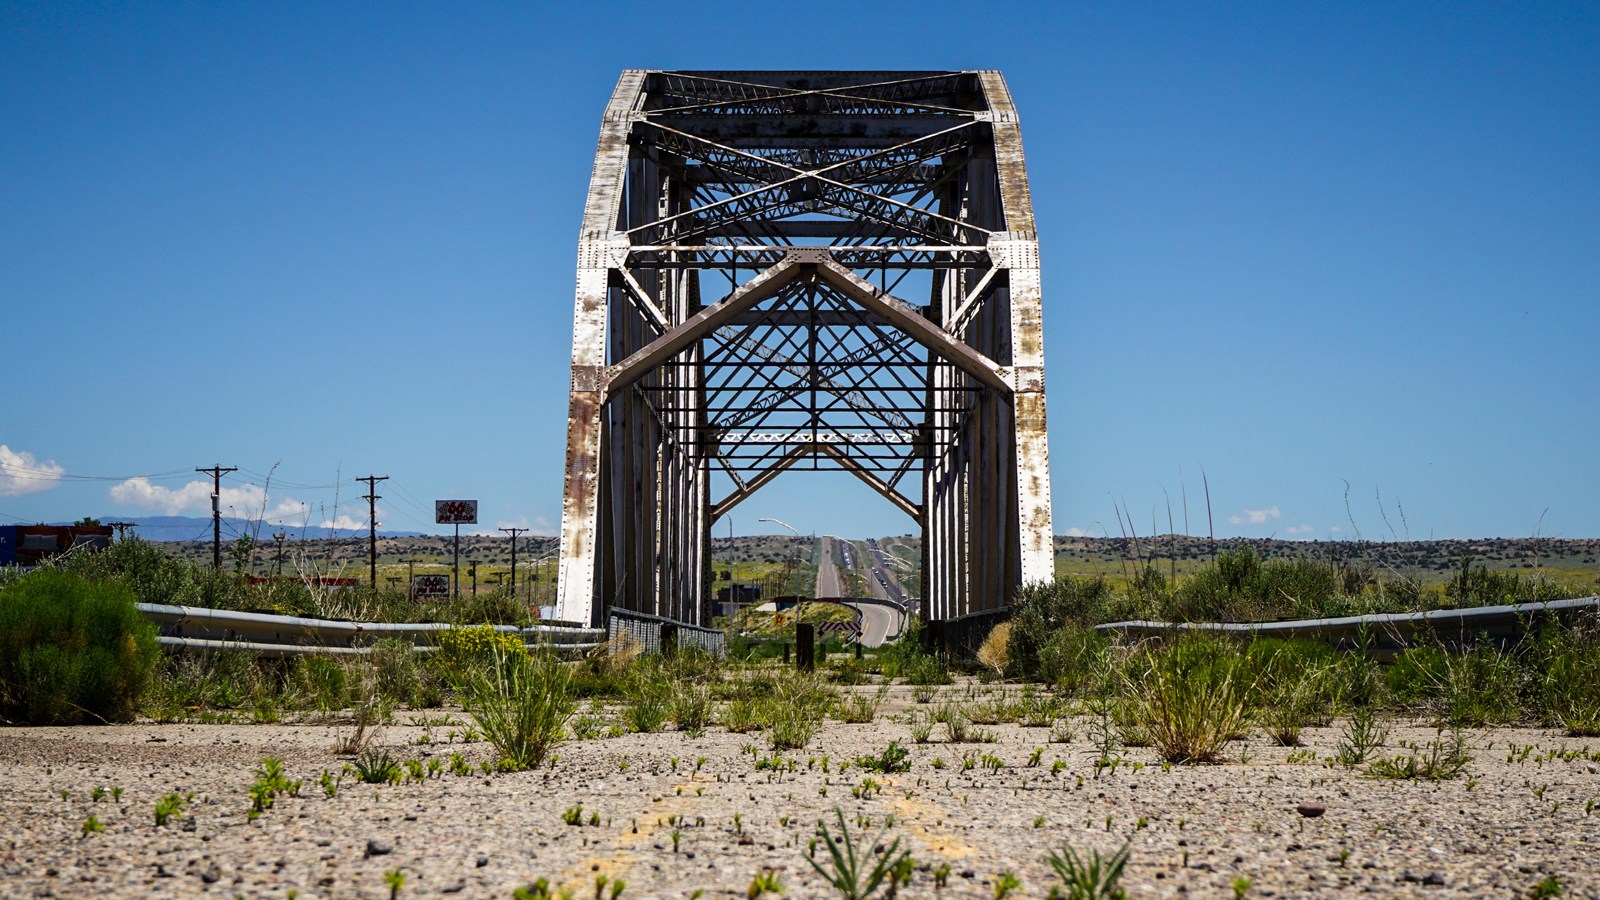 A large arched metal truss bridge spanning a river.